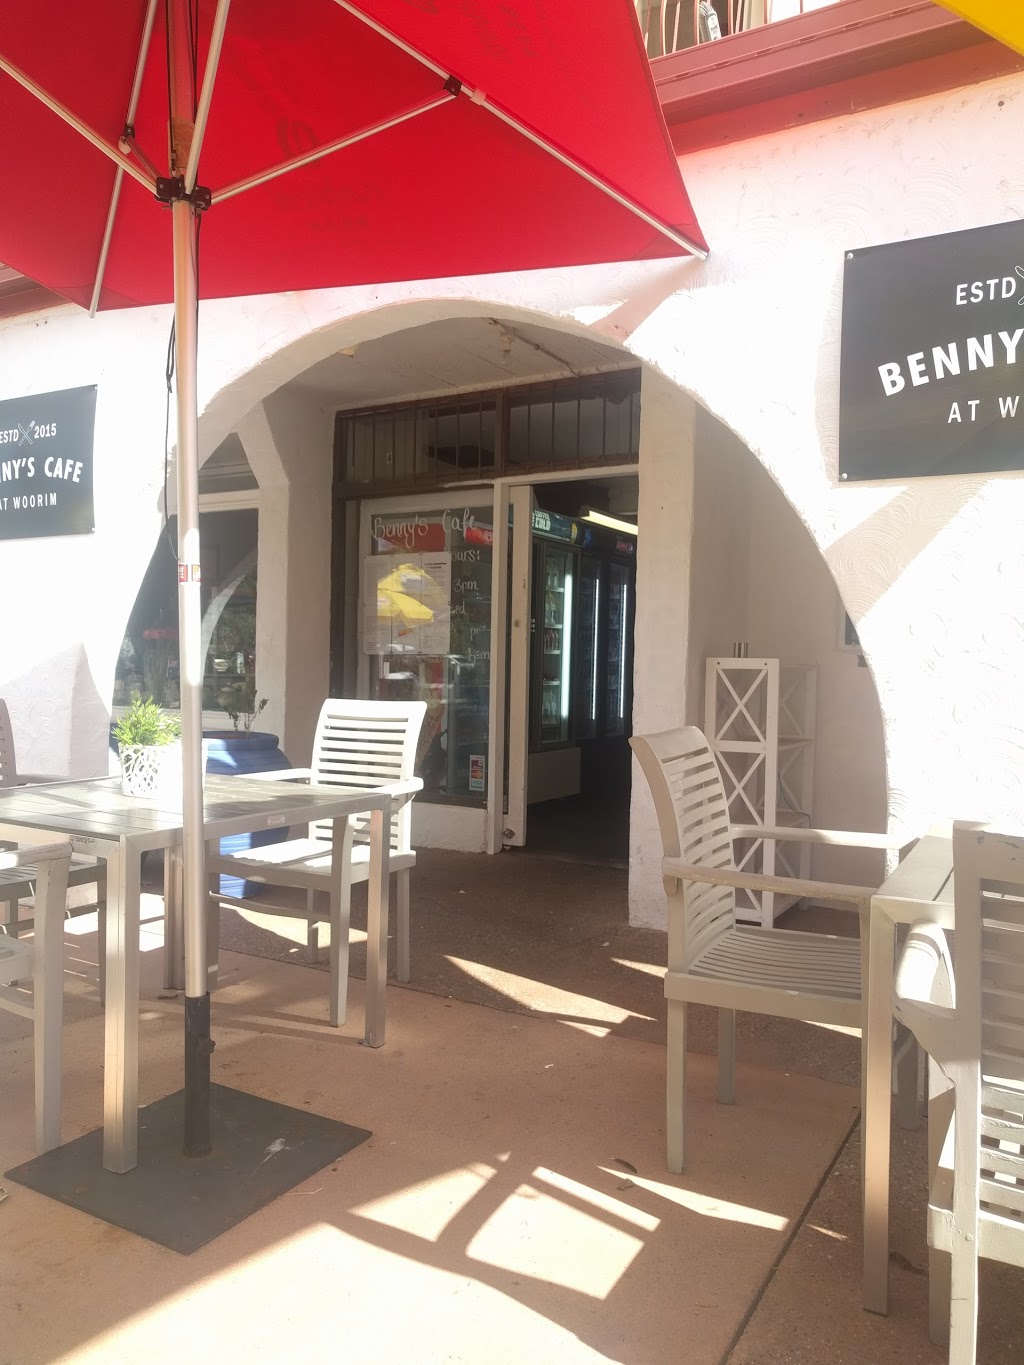 Bennys Cafe At Woorim | cafe | 4 Rickman Parade, Woorim QLD 4507, Australia